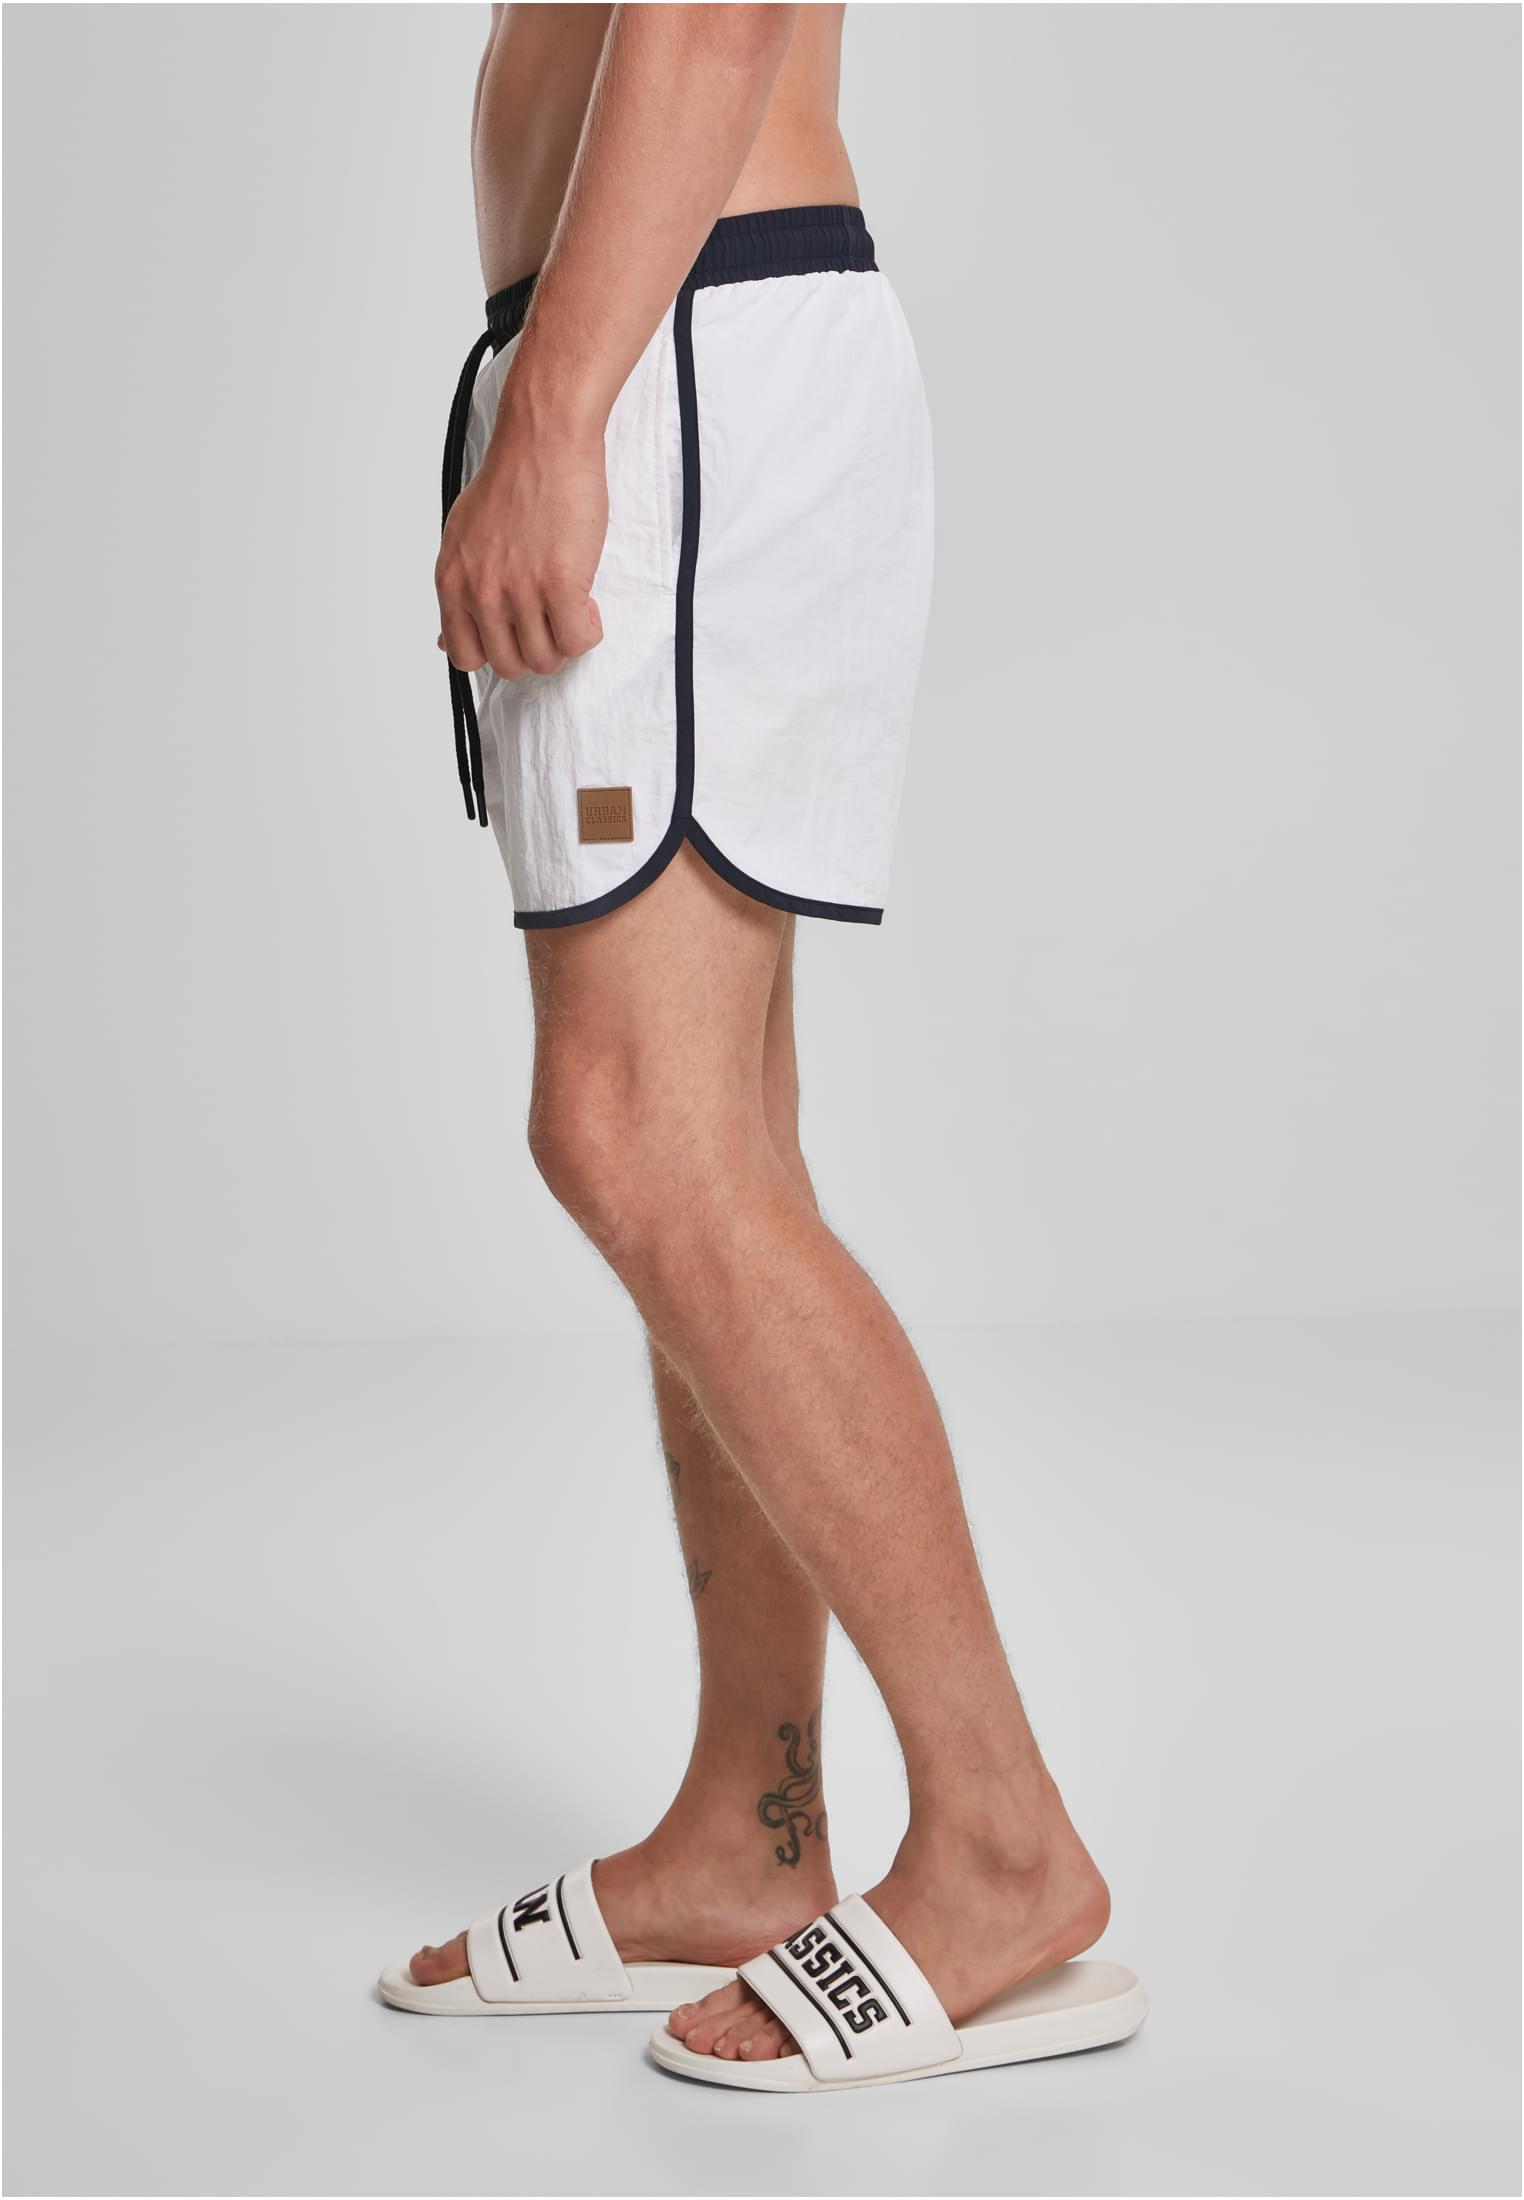 Plus Size Retro Swimshorts in Farbe white/navy